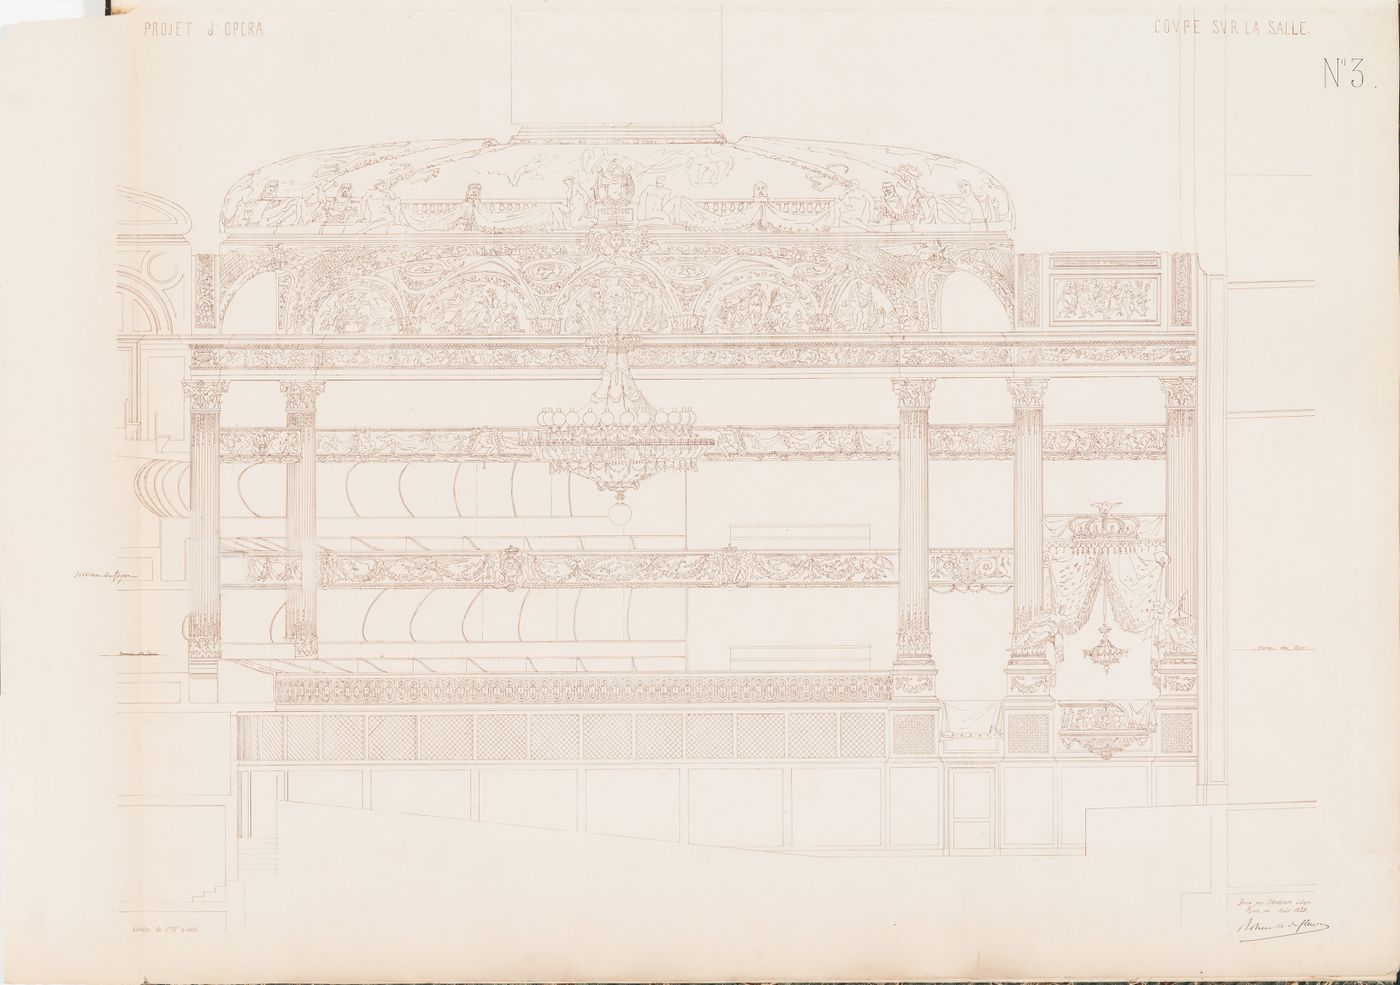 Project through an opera house through the Théâtre impérial de l'opéra: Longitudinal section through the auditorium